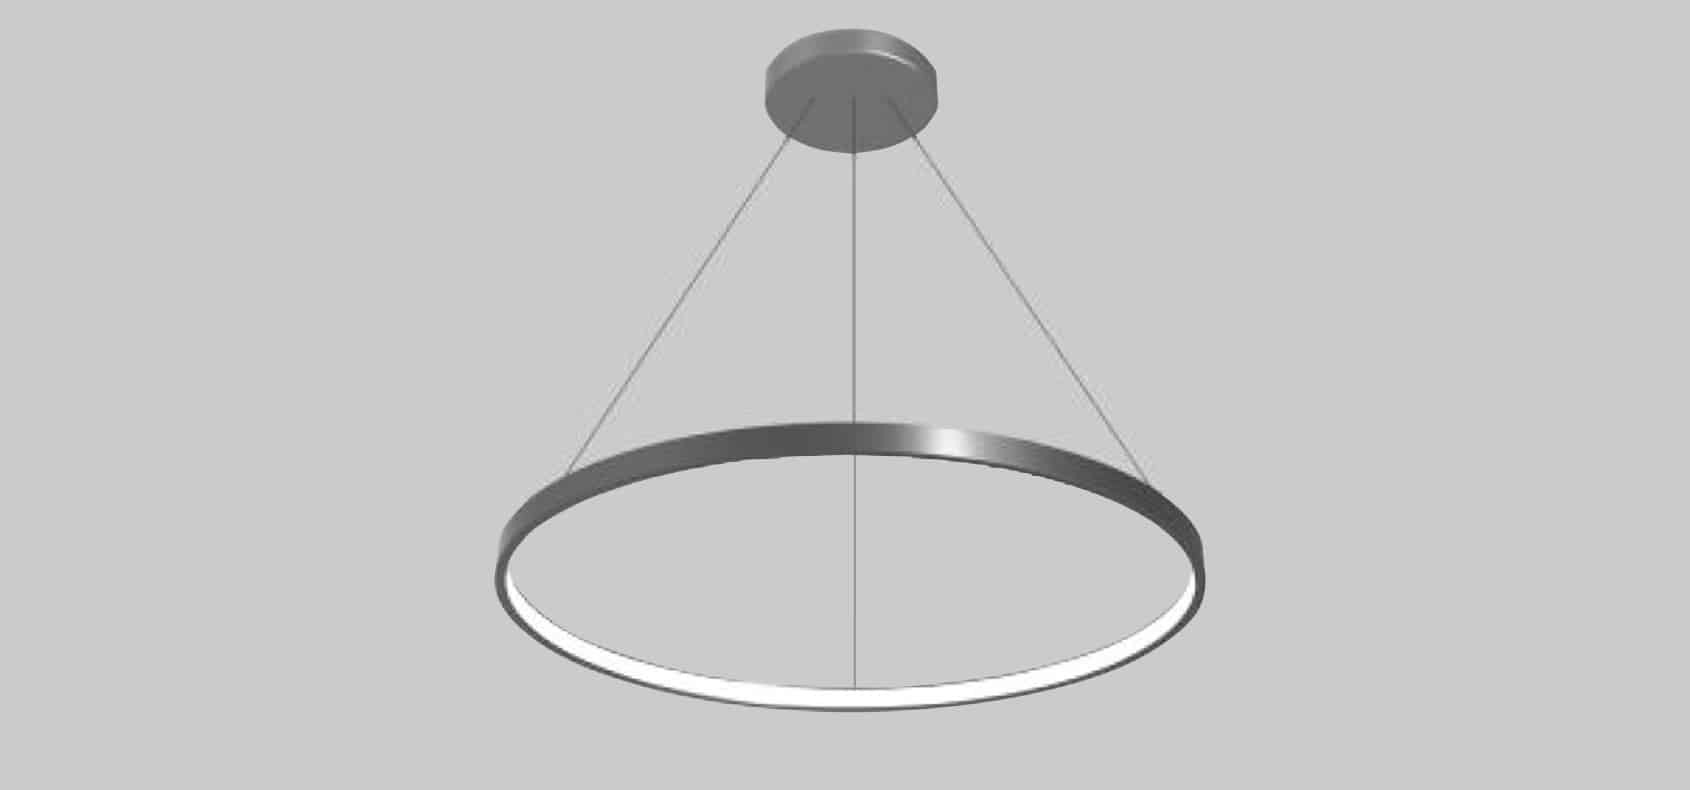 LED Ring Light Fixtures For Sale - Commercial LED Ring Lighting